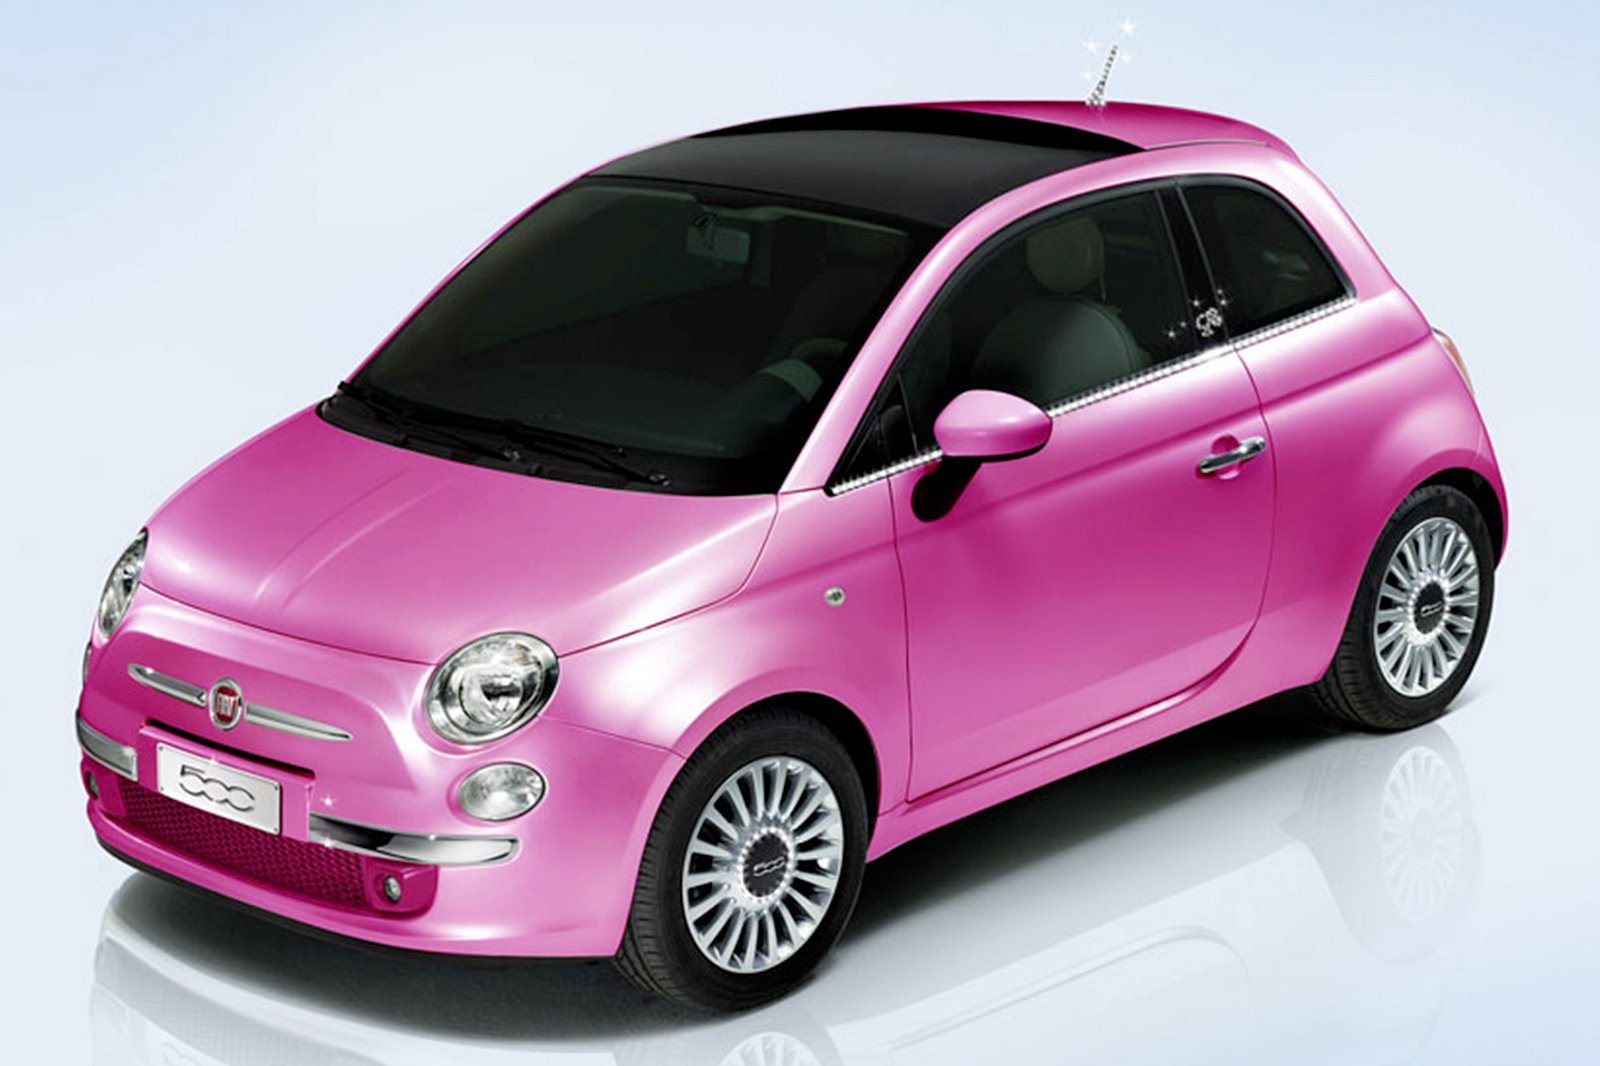 Shocking Pink Fiat 500 Was A Barbie Homage Before 'Barbenheimer